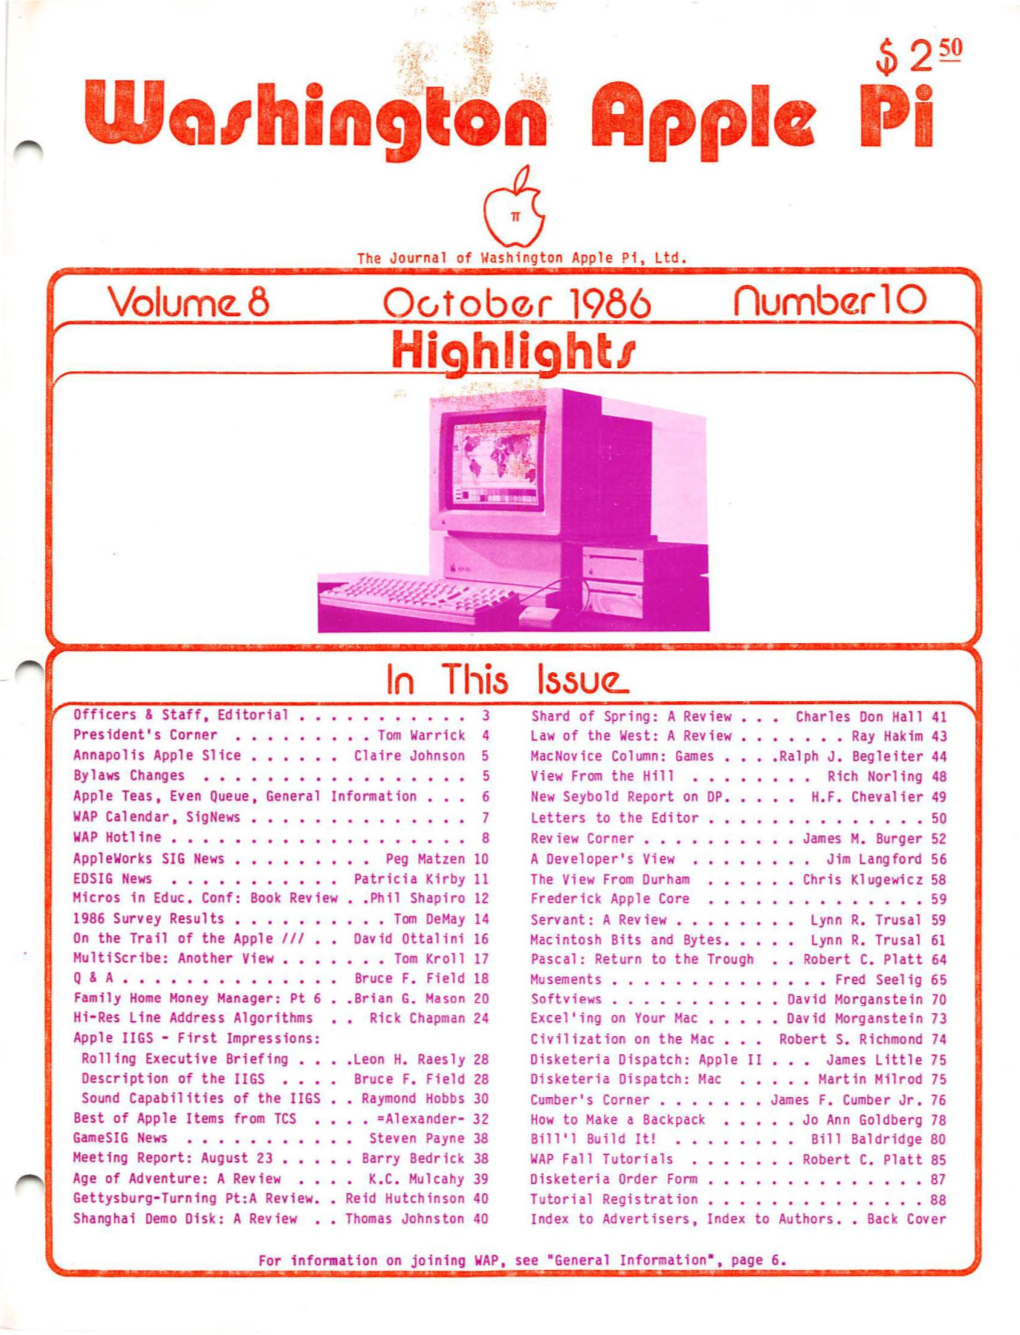 Washington Apple Pi Journal, October 1986